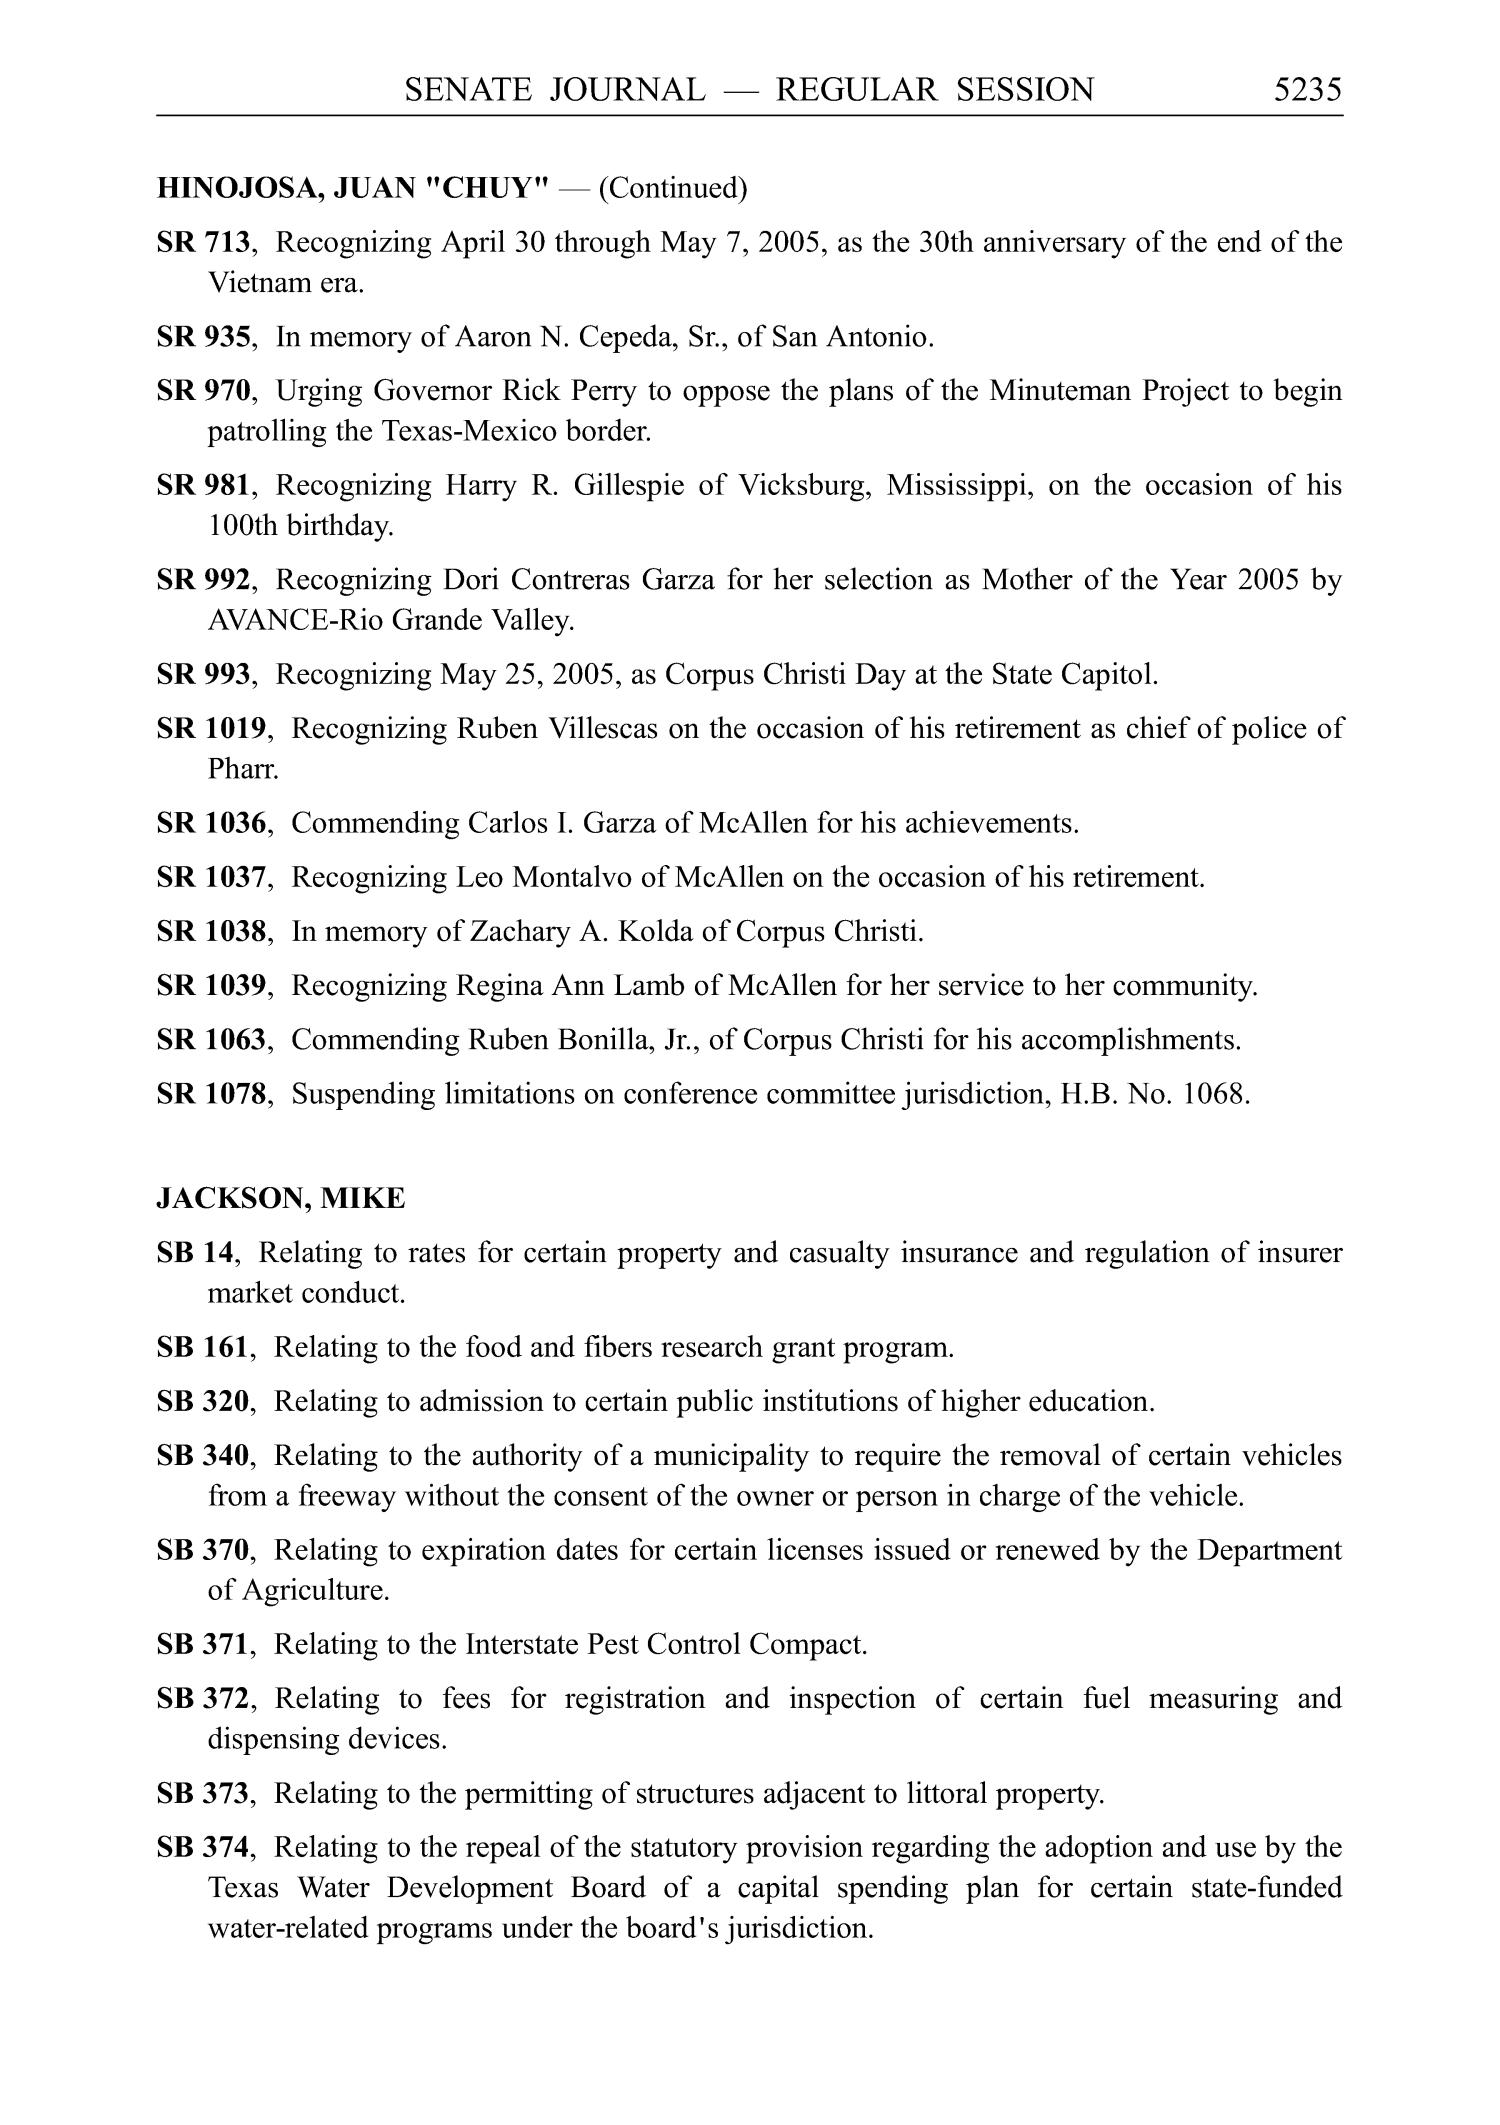 Journal of the Senate, Regular Session of the Seventy-Ninth Legislature of the State of Texas, Volume 5
                                                
                                                    5235
                                                